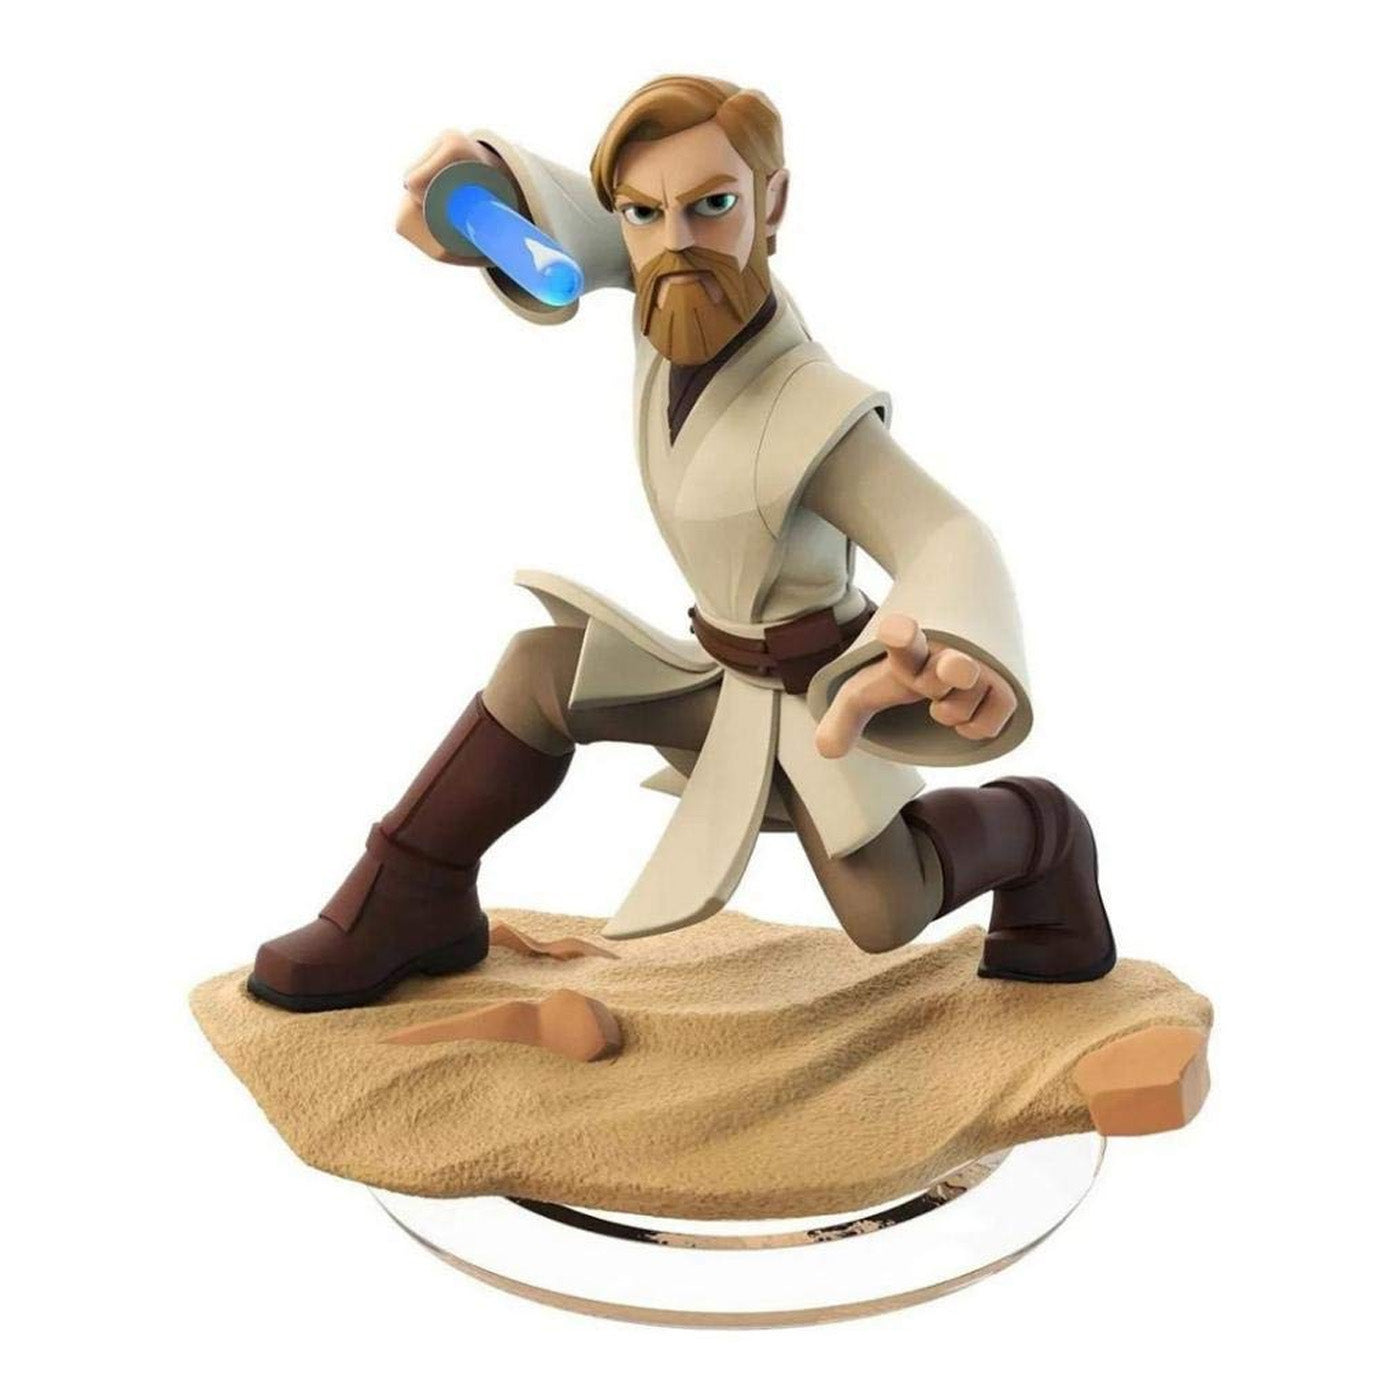 Disney Infinity 3.0 Character: Obi-Wan Kenobi